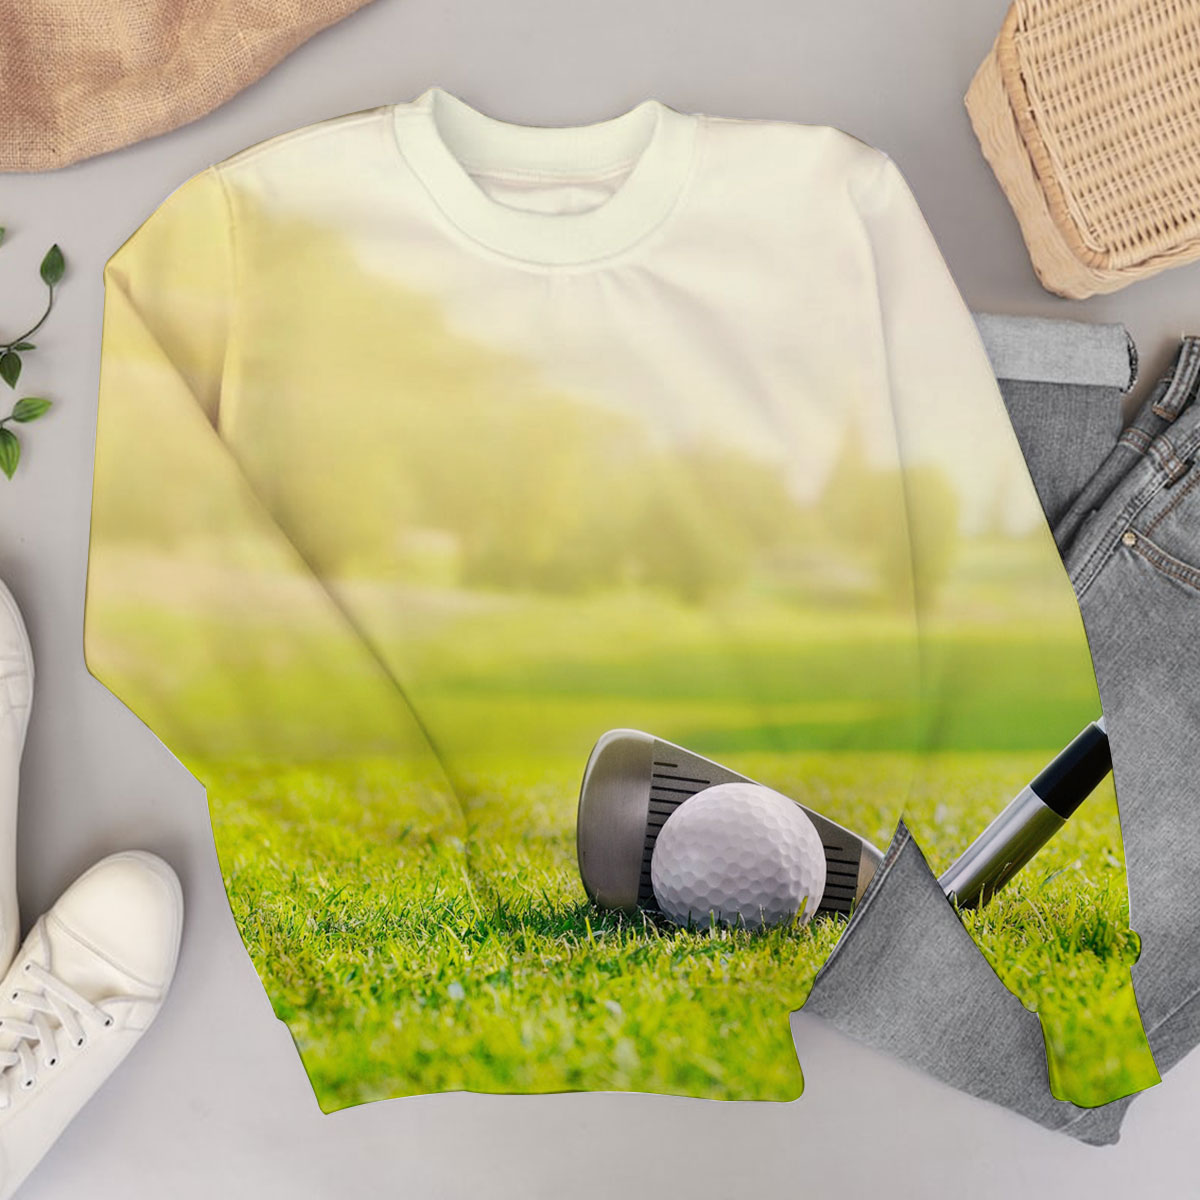 Golf Tools On Grass Sweater